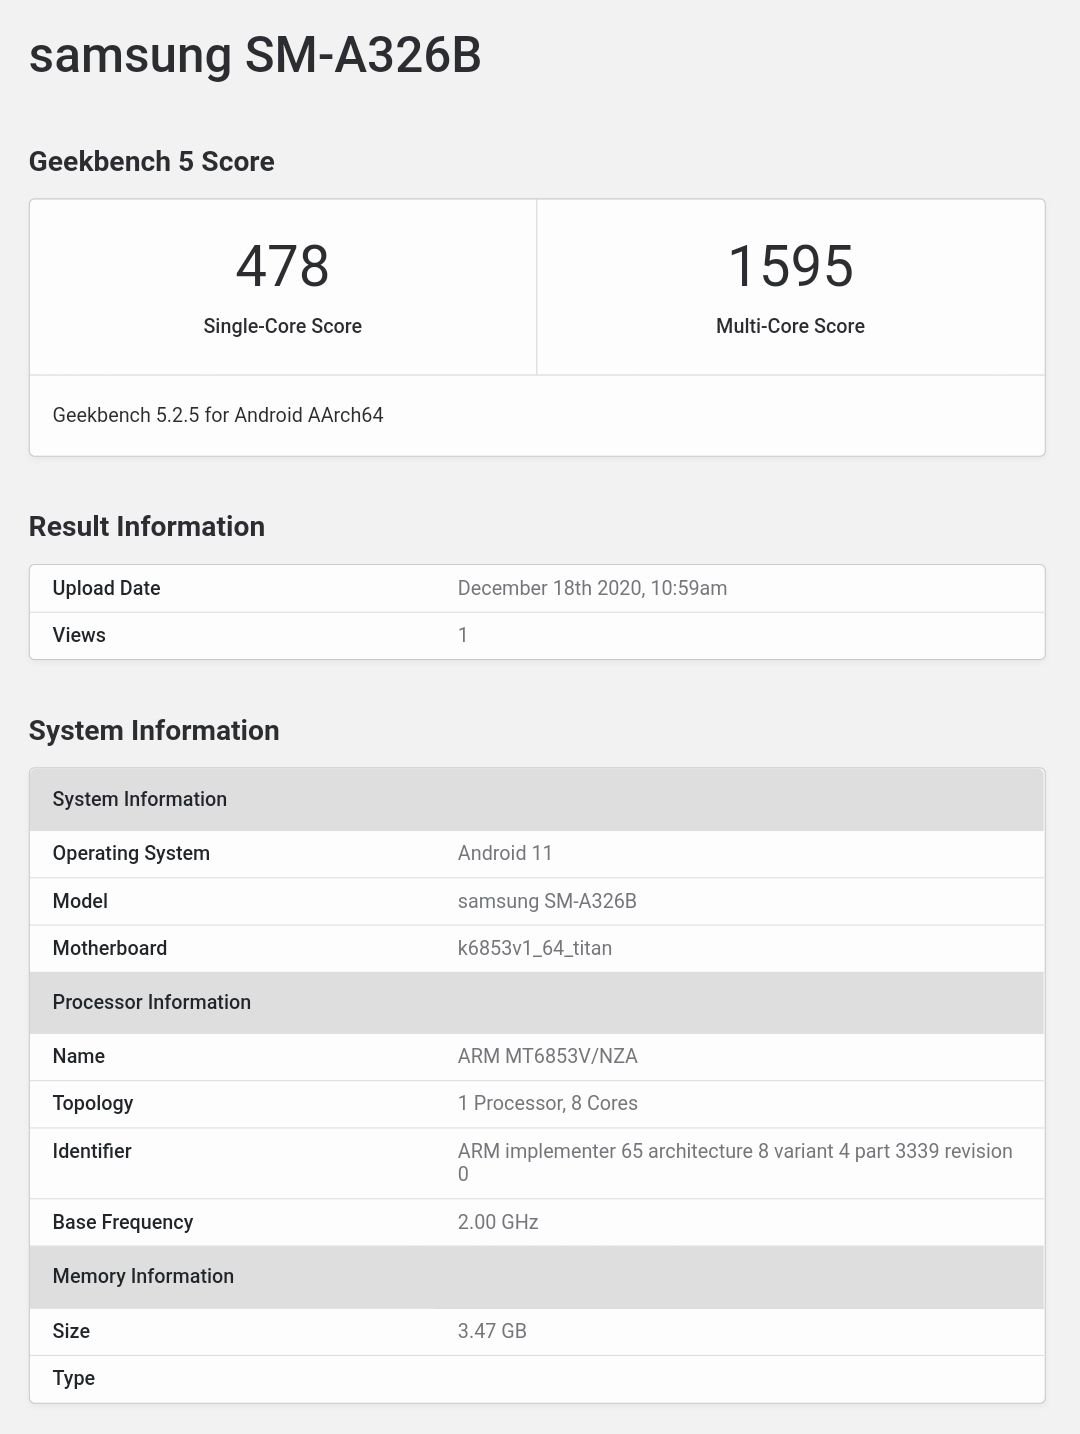 Samsung Galaxy A32 5G con Dimensity 720 e Android 11 OS appaiono su Geekbench